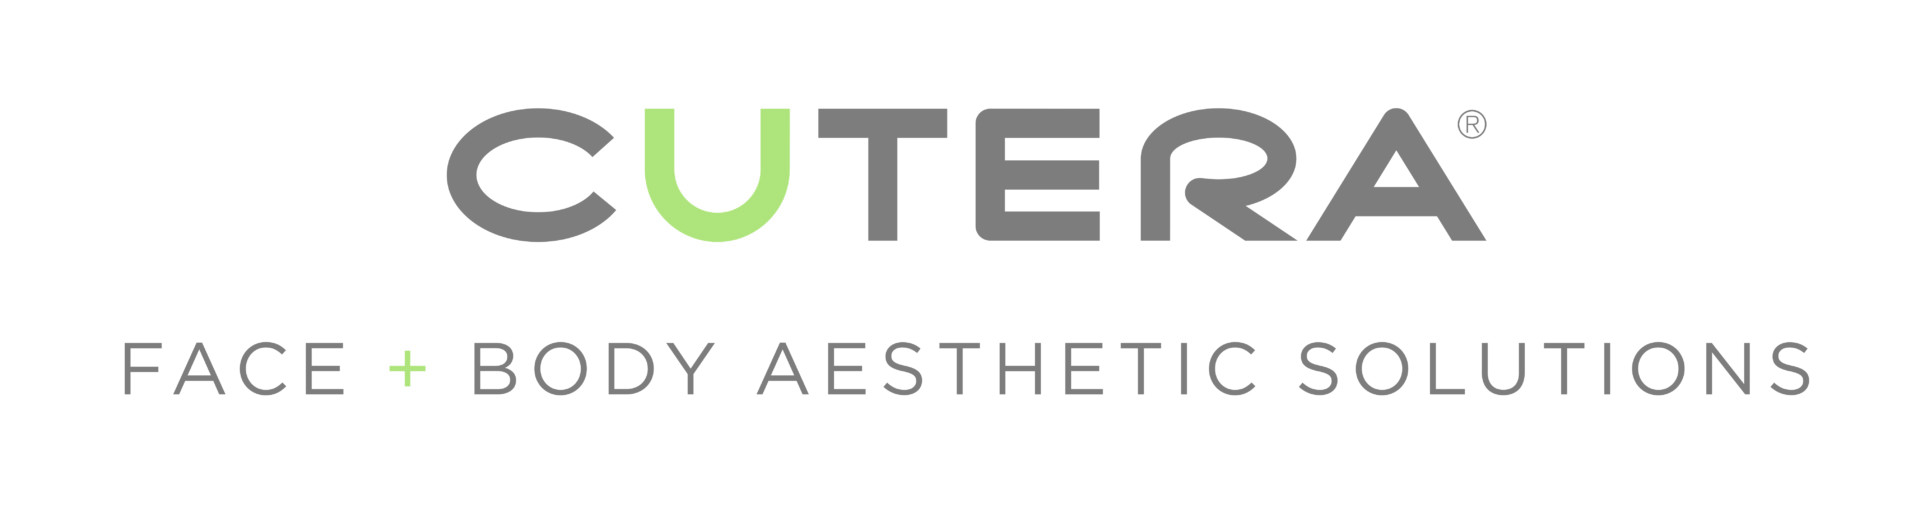 Cutera_Logo with Tag